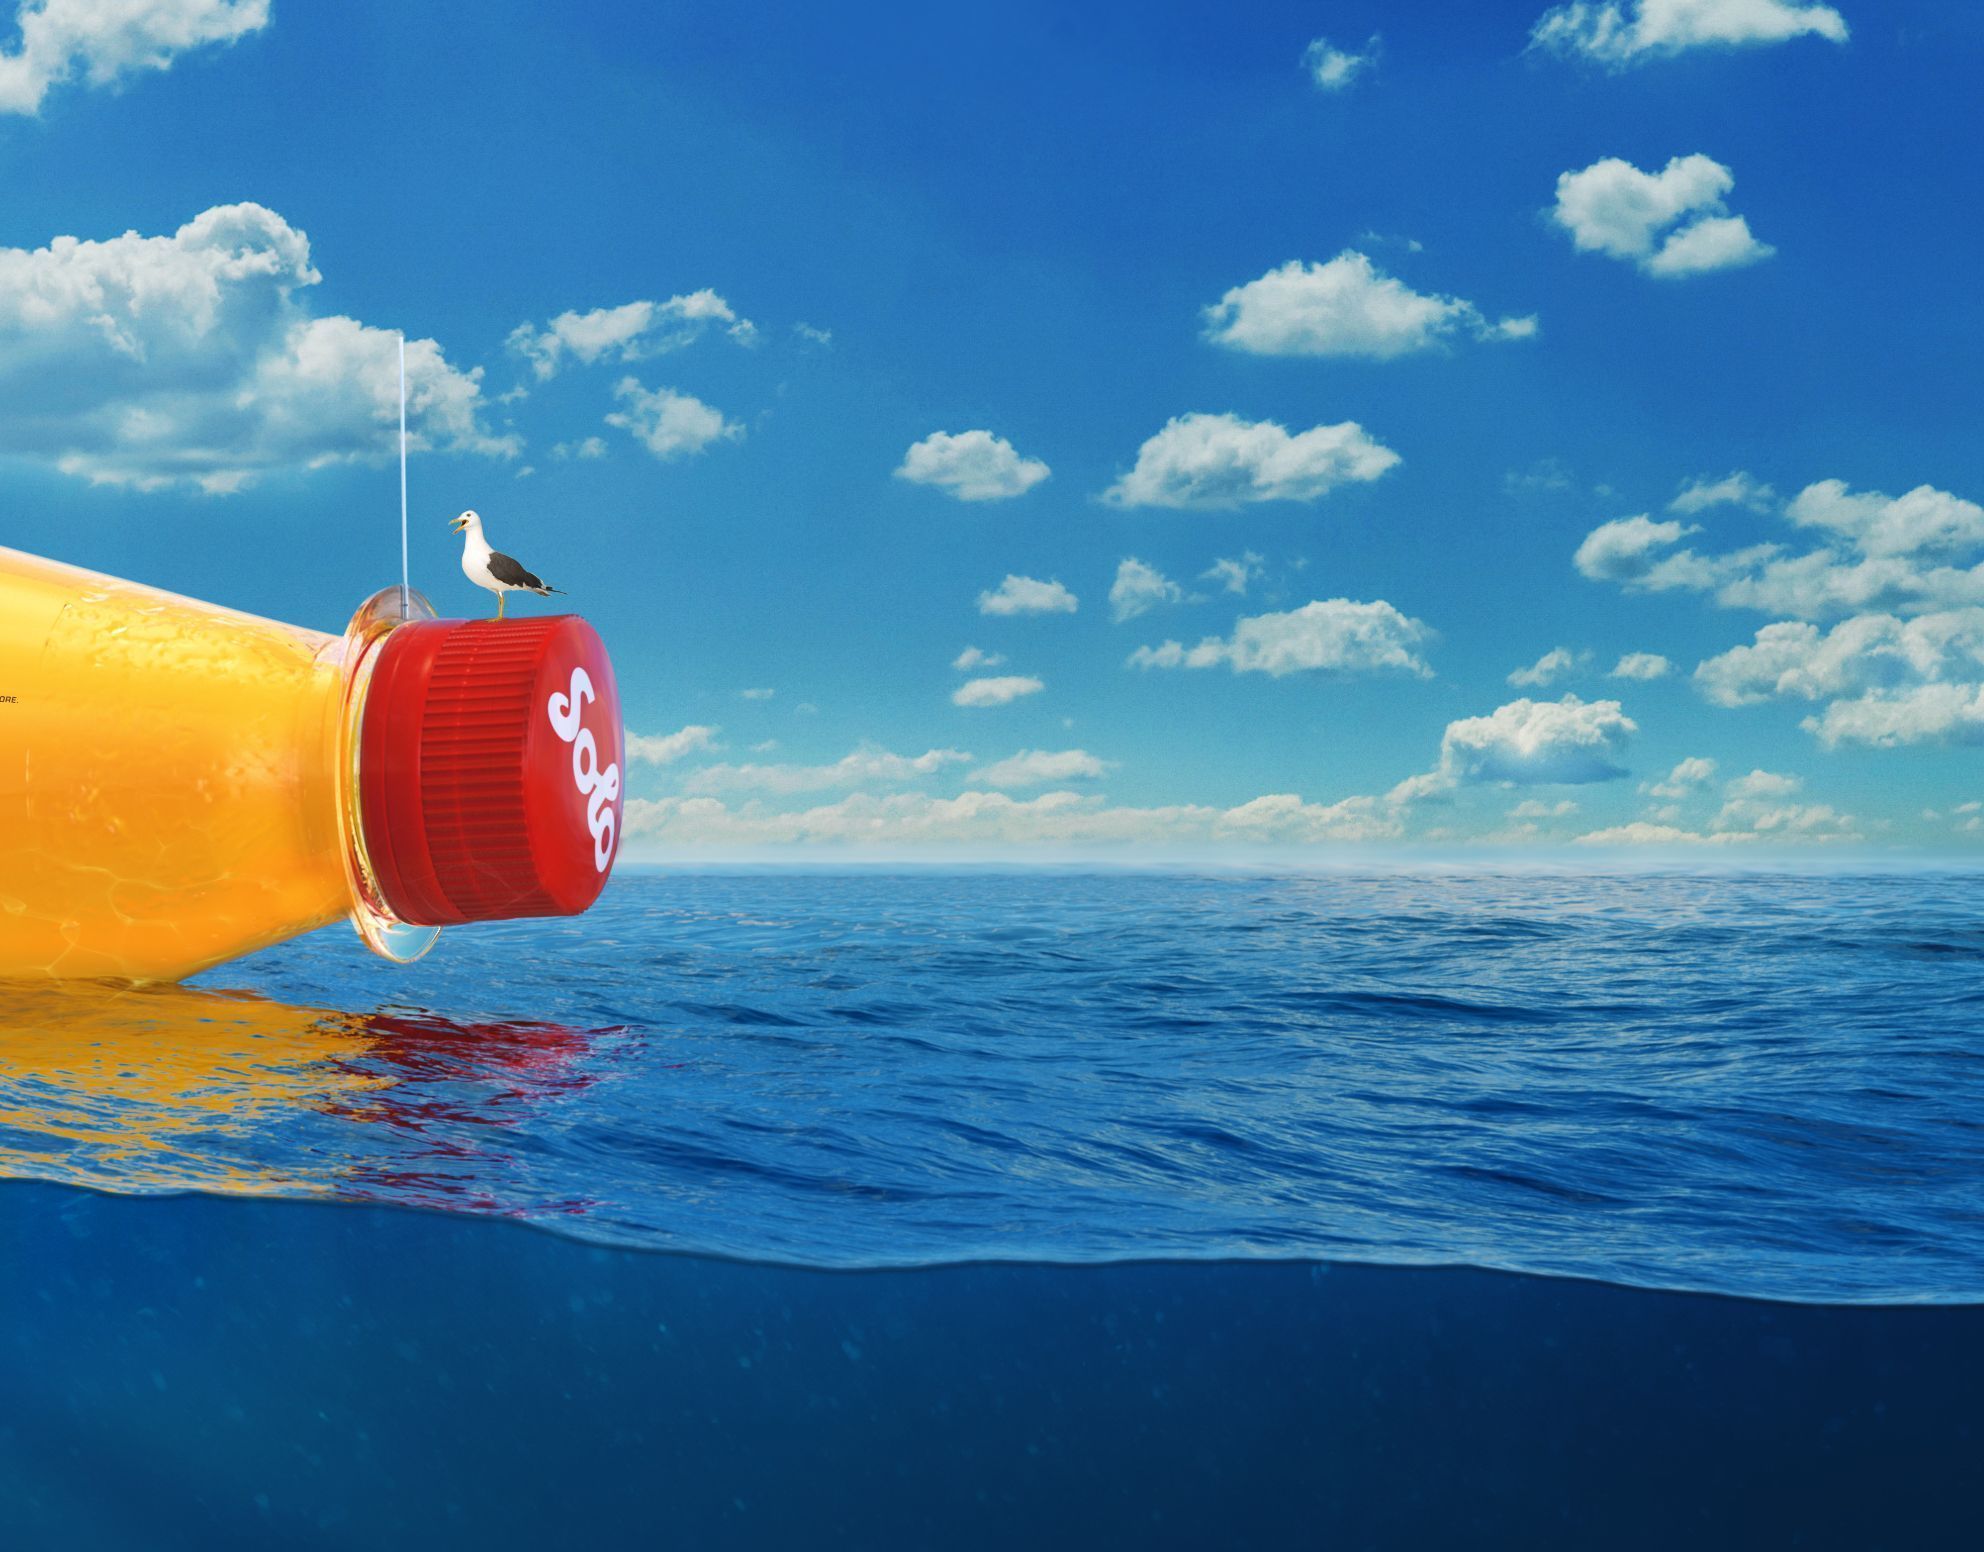 Lanzan al mar gigantezca botella con mensaje secreto